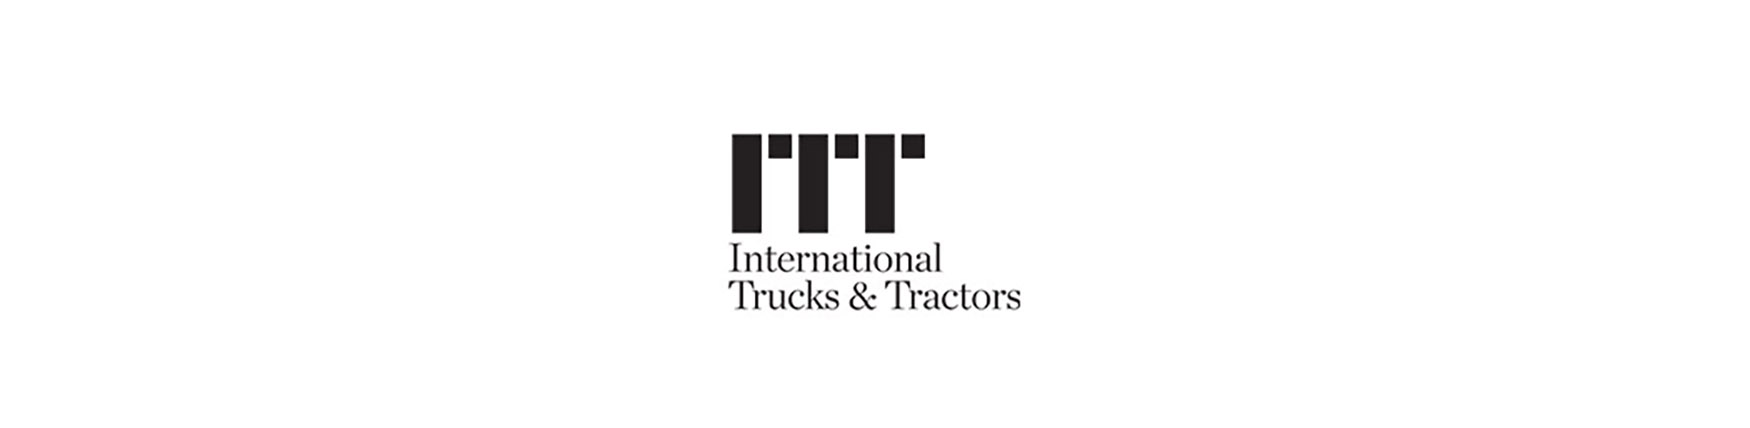 Foto de ITT, International Trucks & Tractors, patrocinador premium de los XVIII Premios Potencia